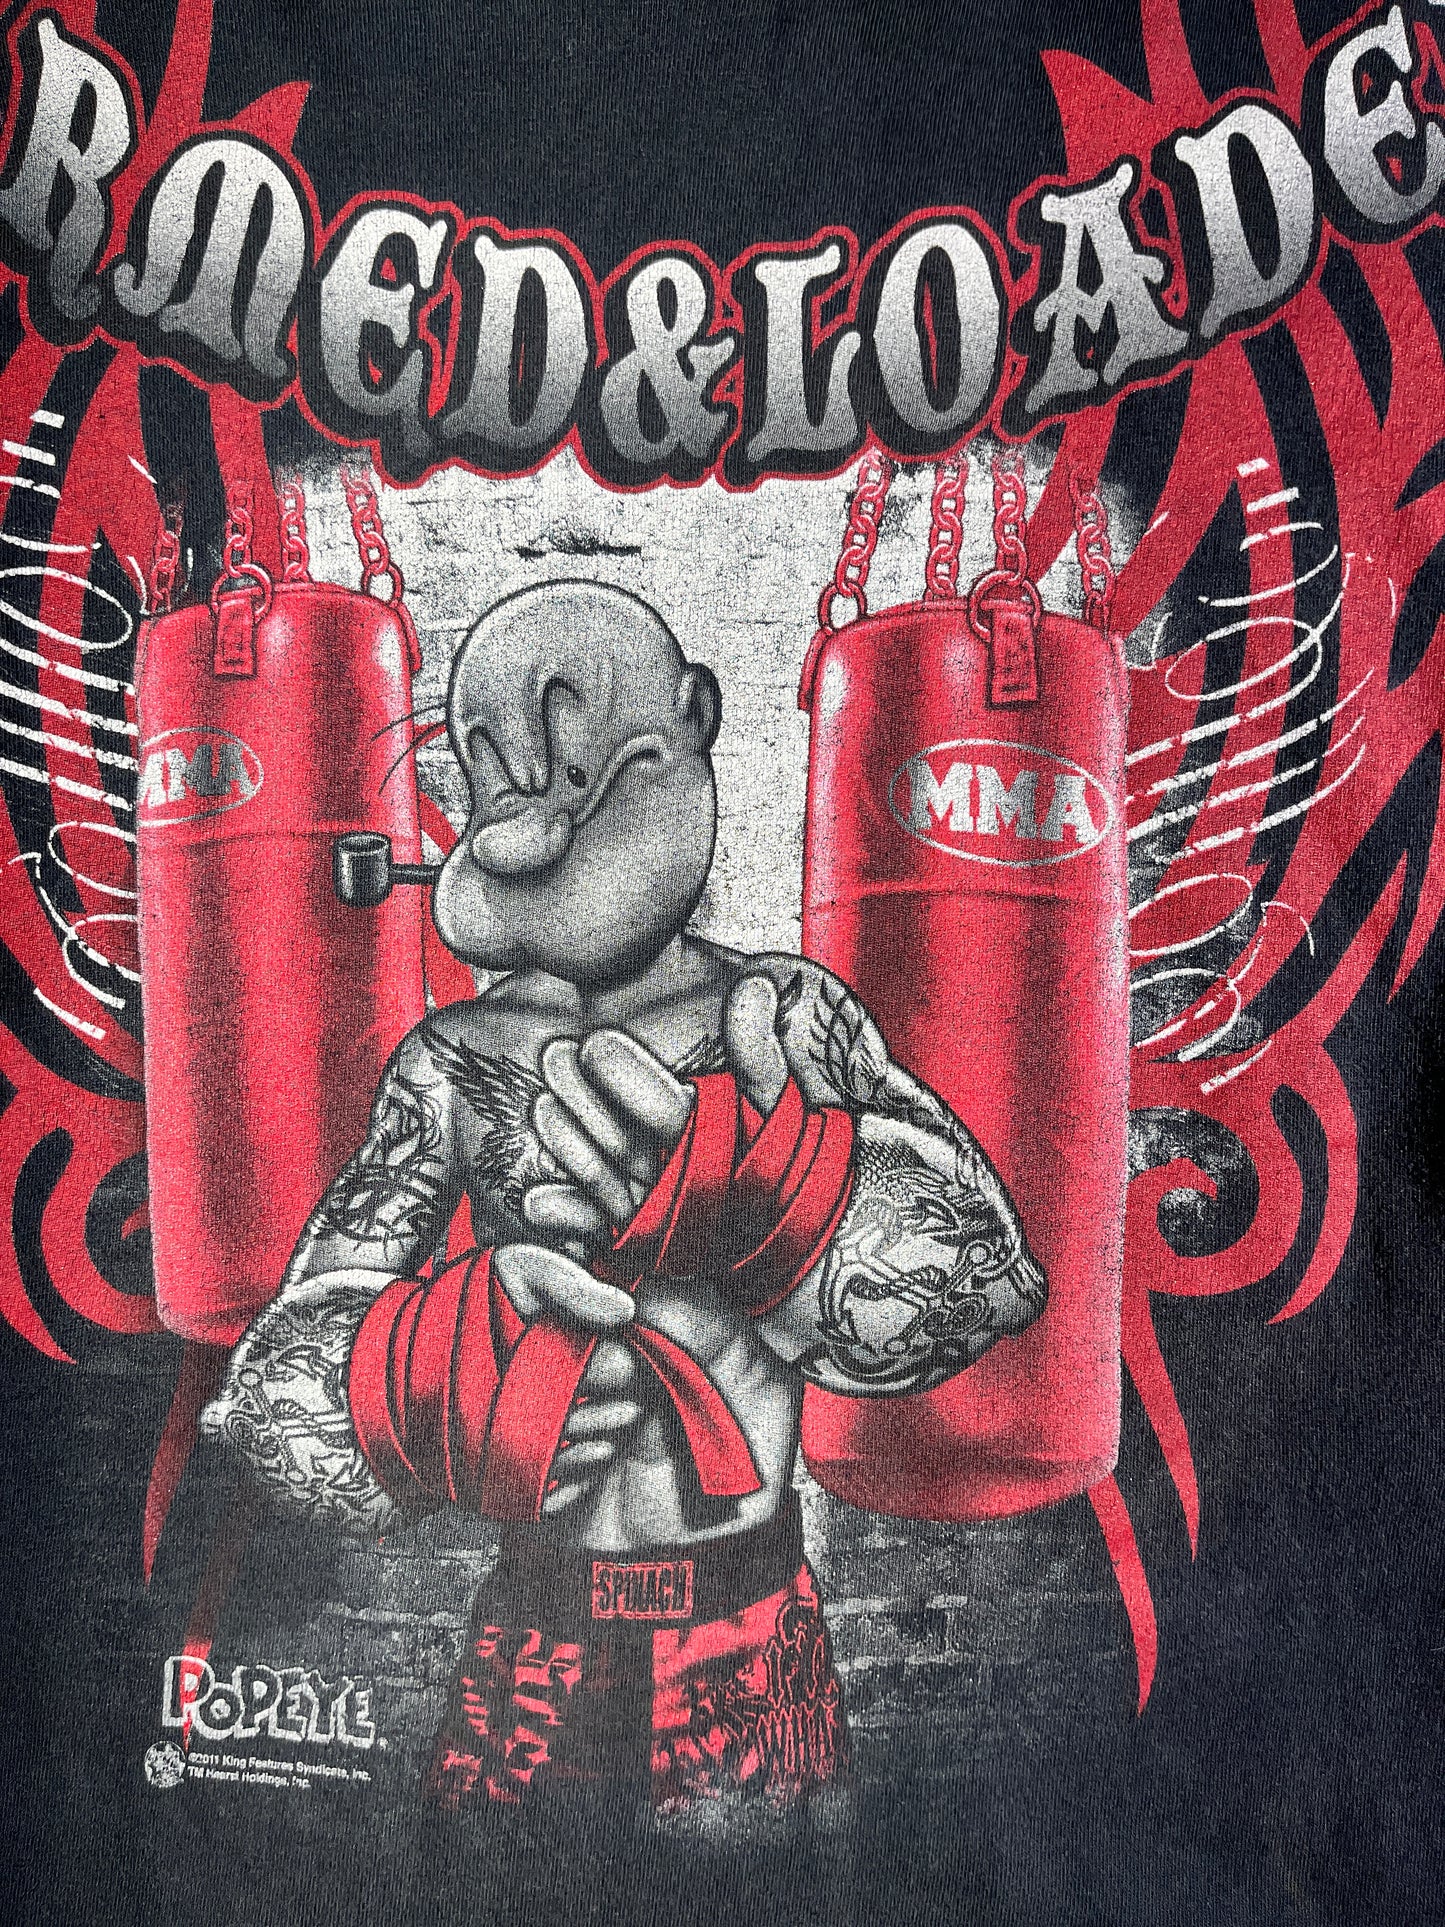 Vintage Popeye T-Shirt ARMED & LOADED! MMA